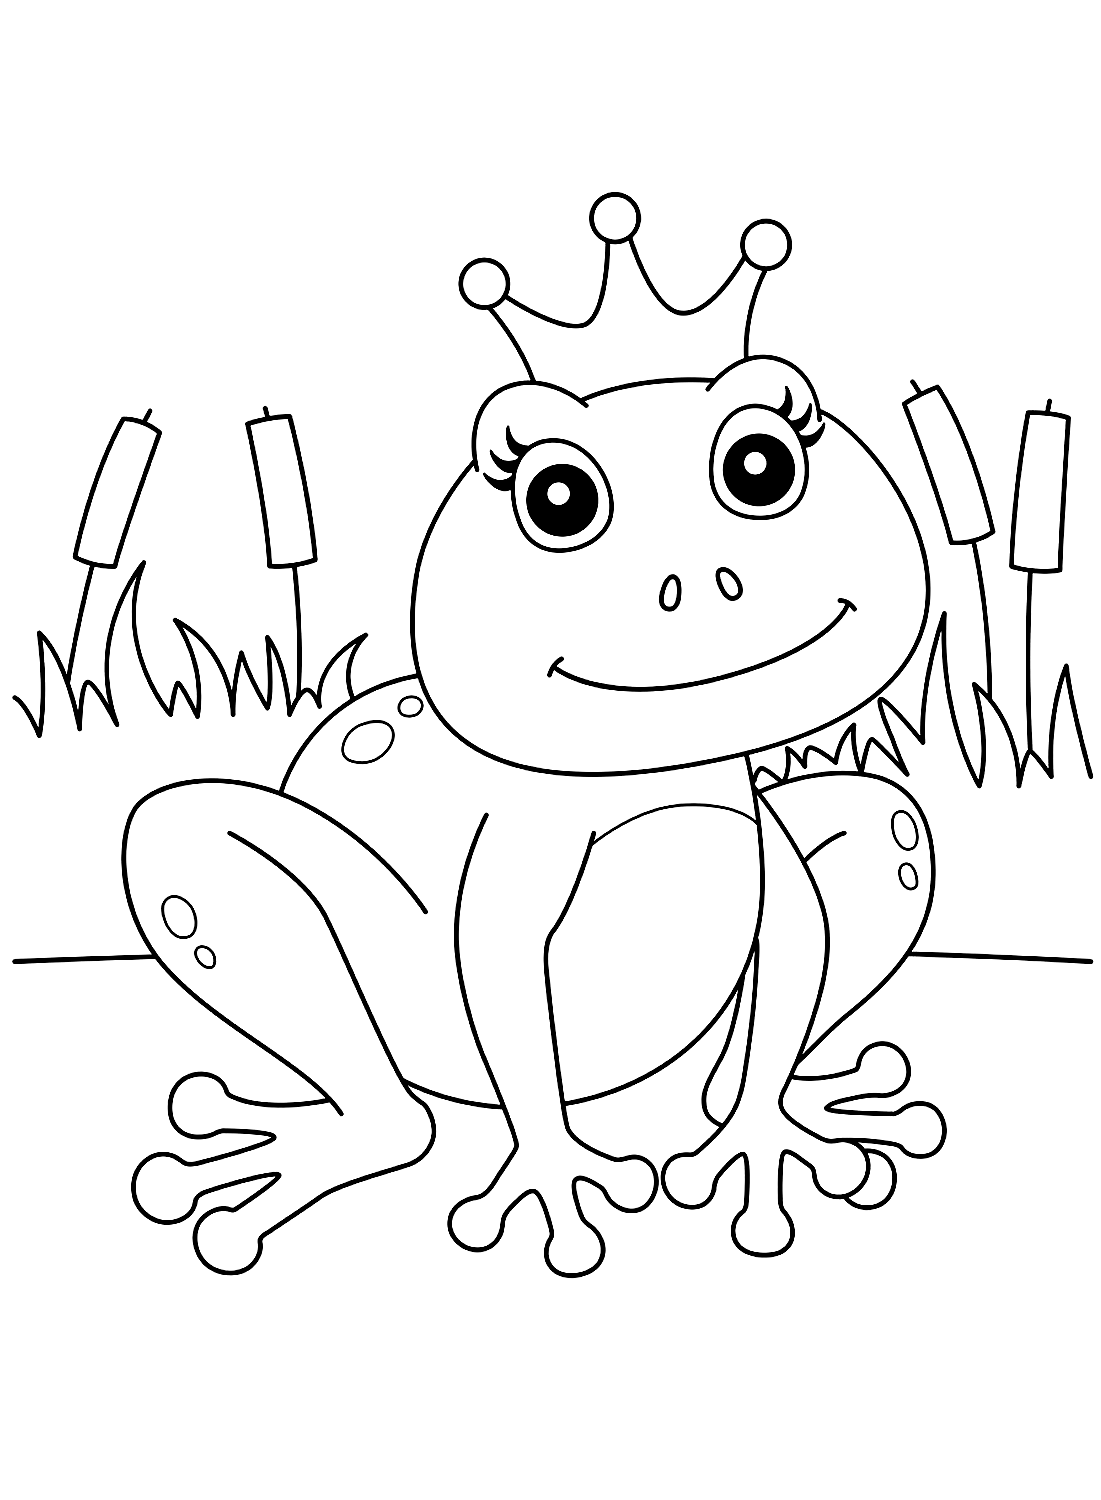 King frog coloring page printable